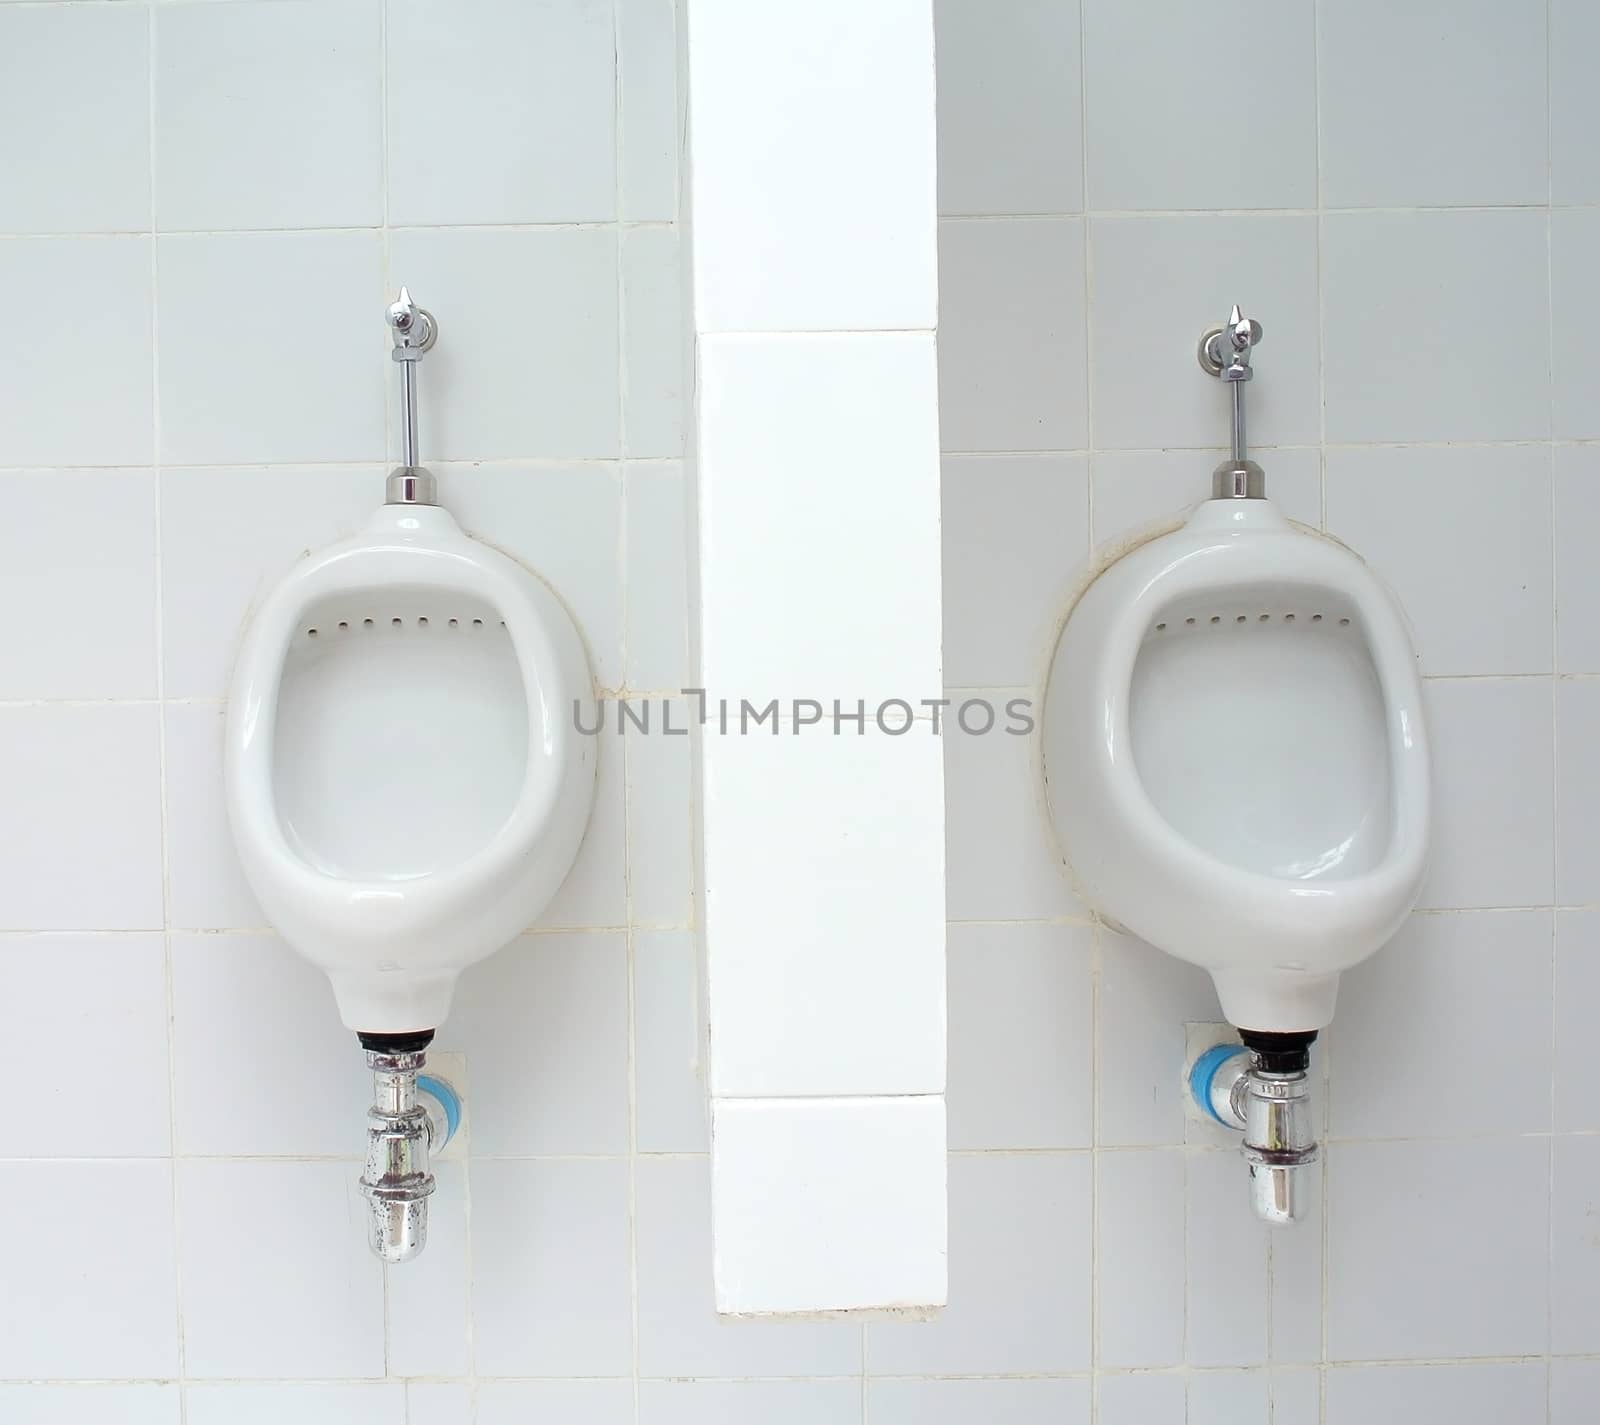 White ceramic sanitary ware in restroom by sommai